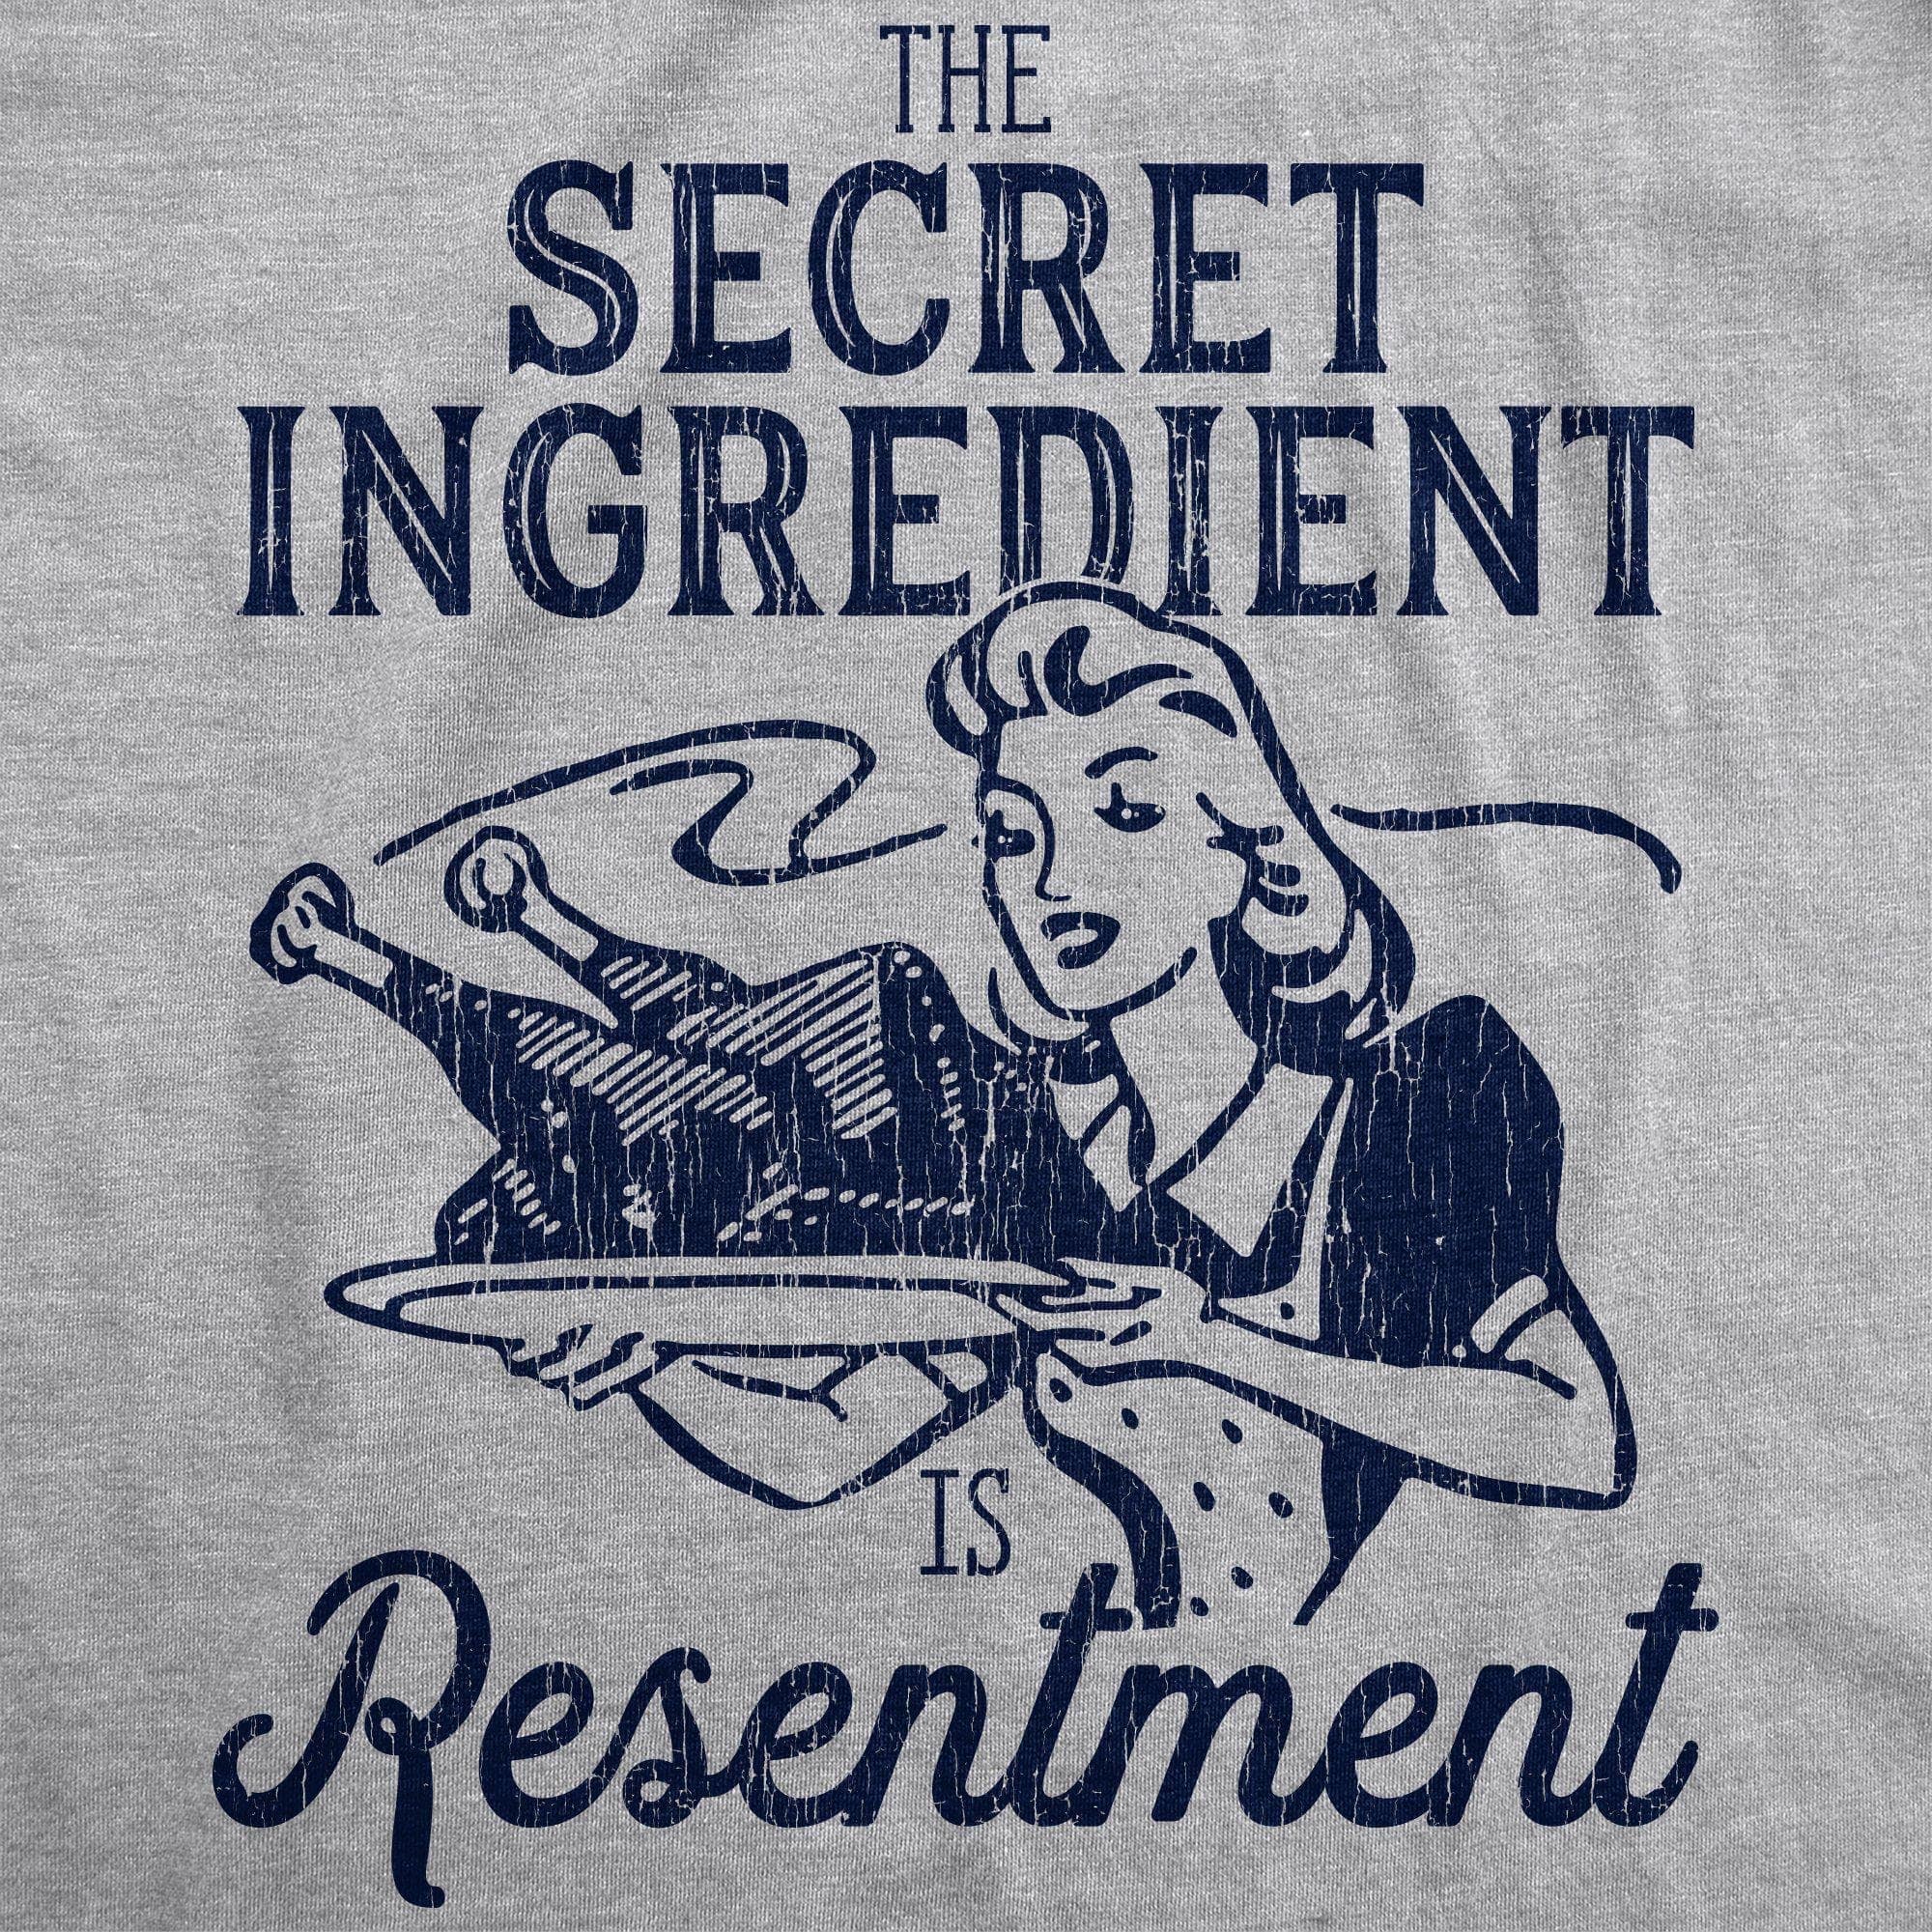 The Secret Ingredient Is Resentment Men's Tshirt - Crazy Dog T-Shirts